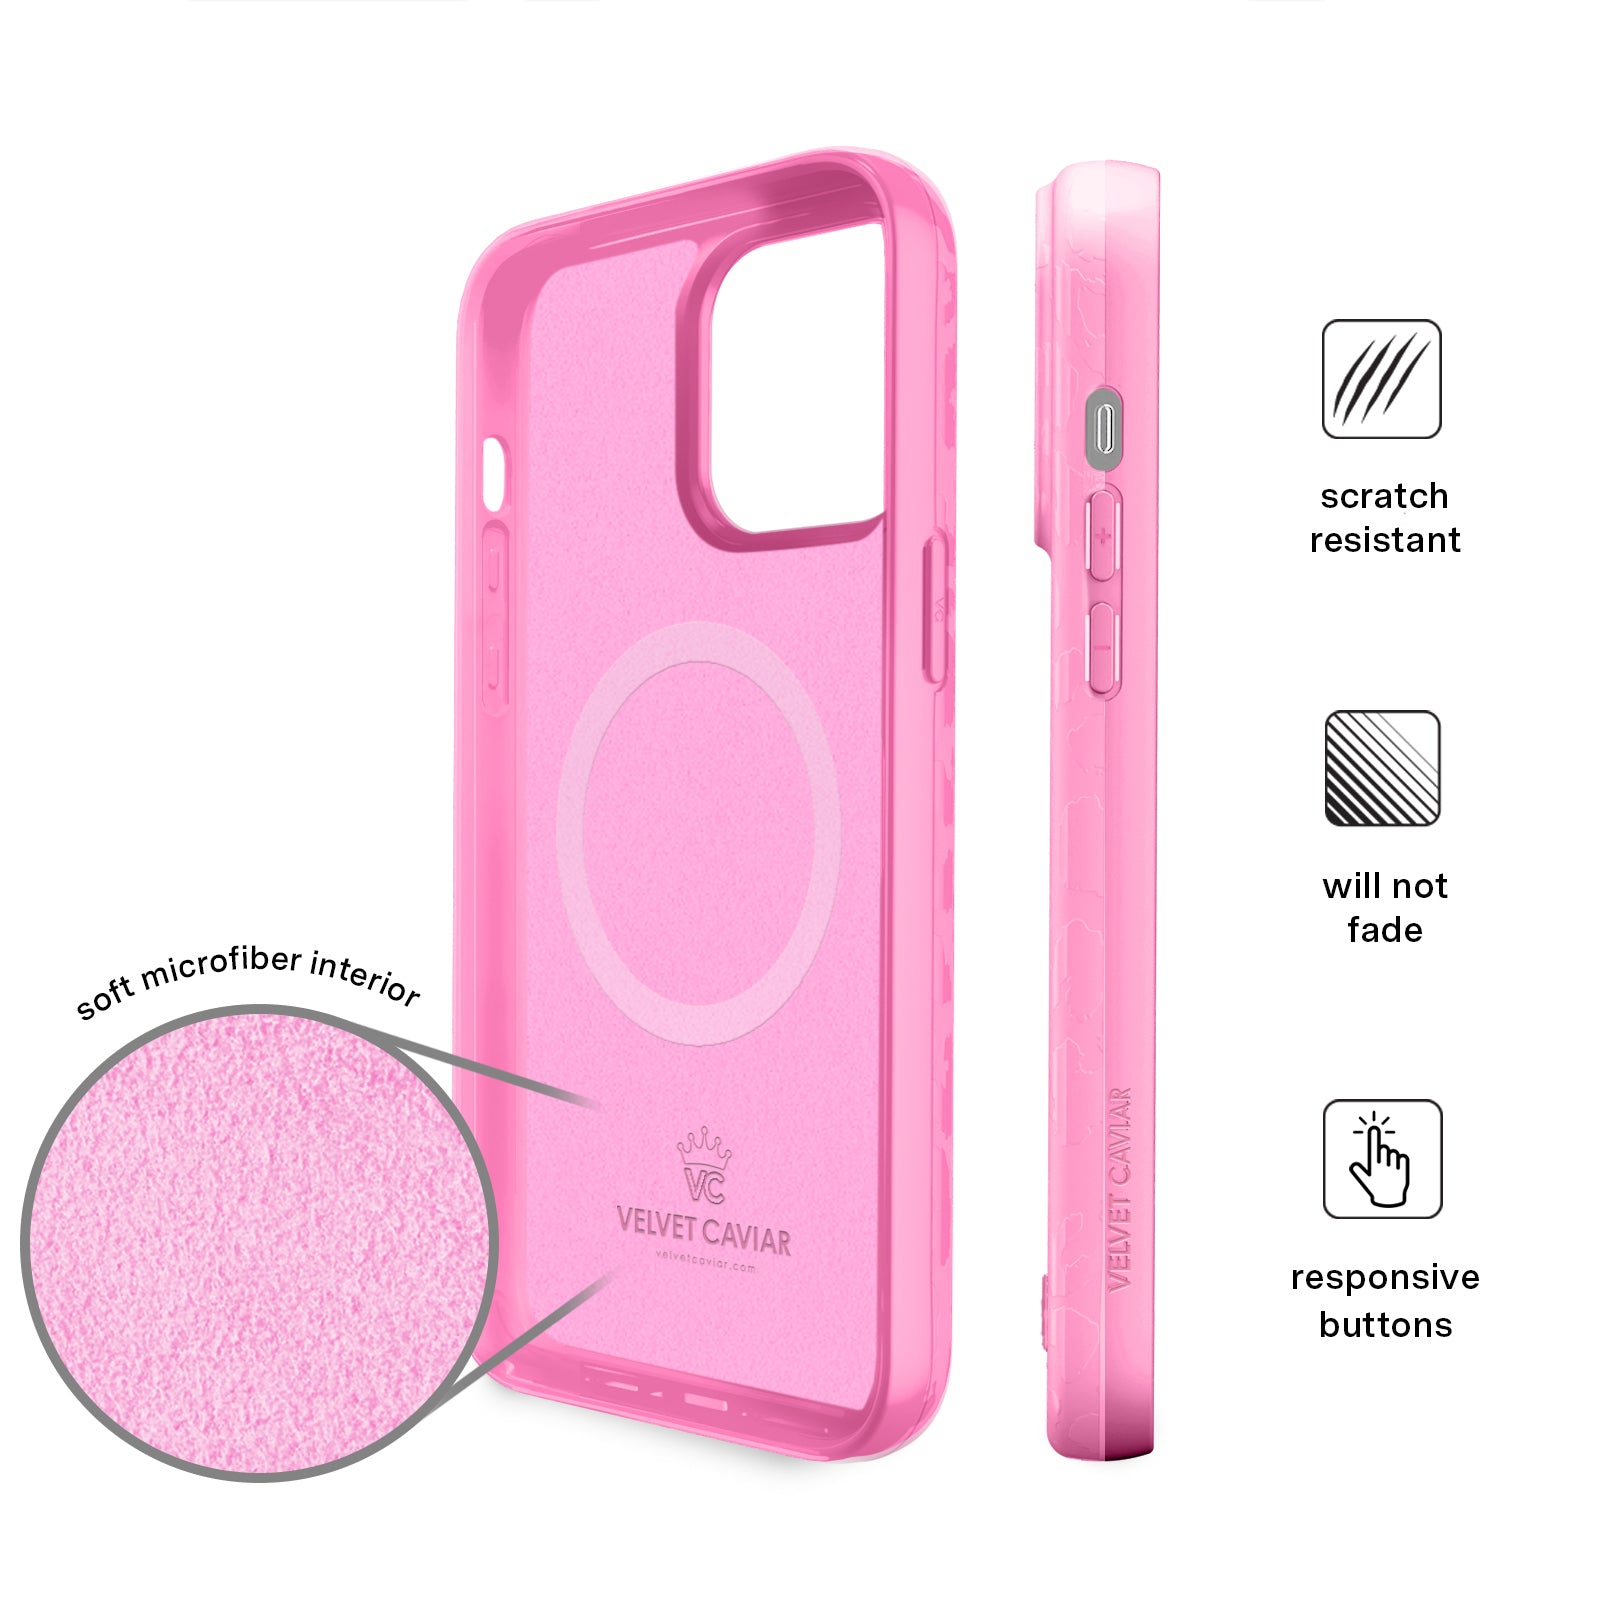 Hot Pink Leopard iPhone Case –